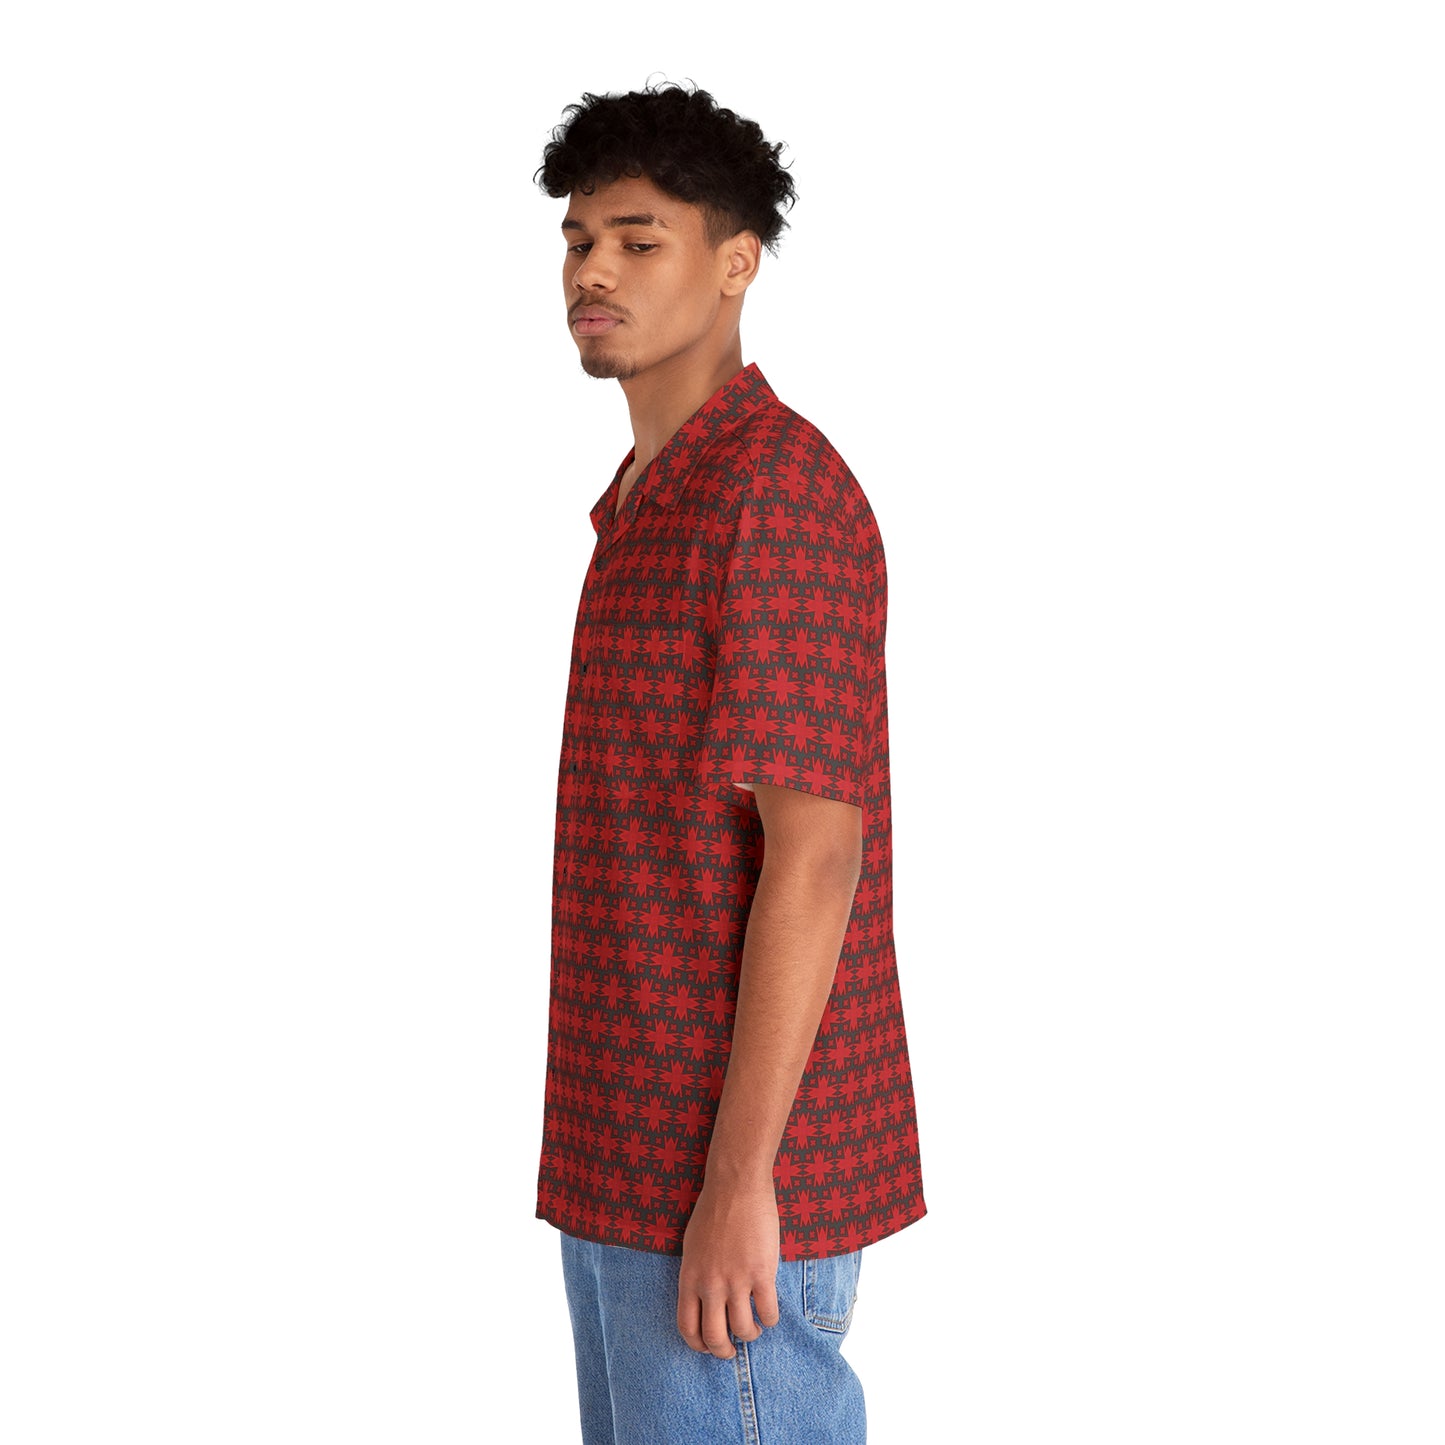 Letter Art - M - Red - Black 000000 - Men's Hawaiian Shirt